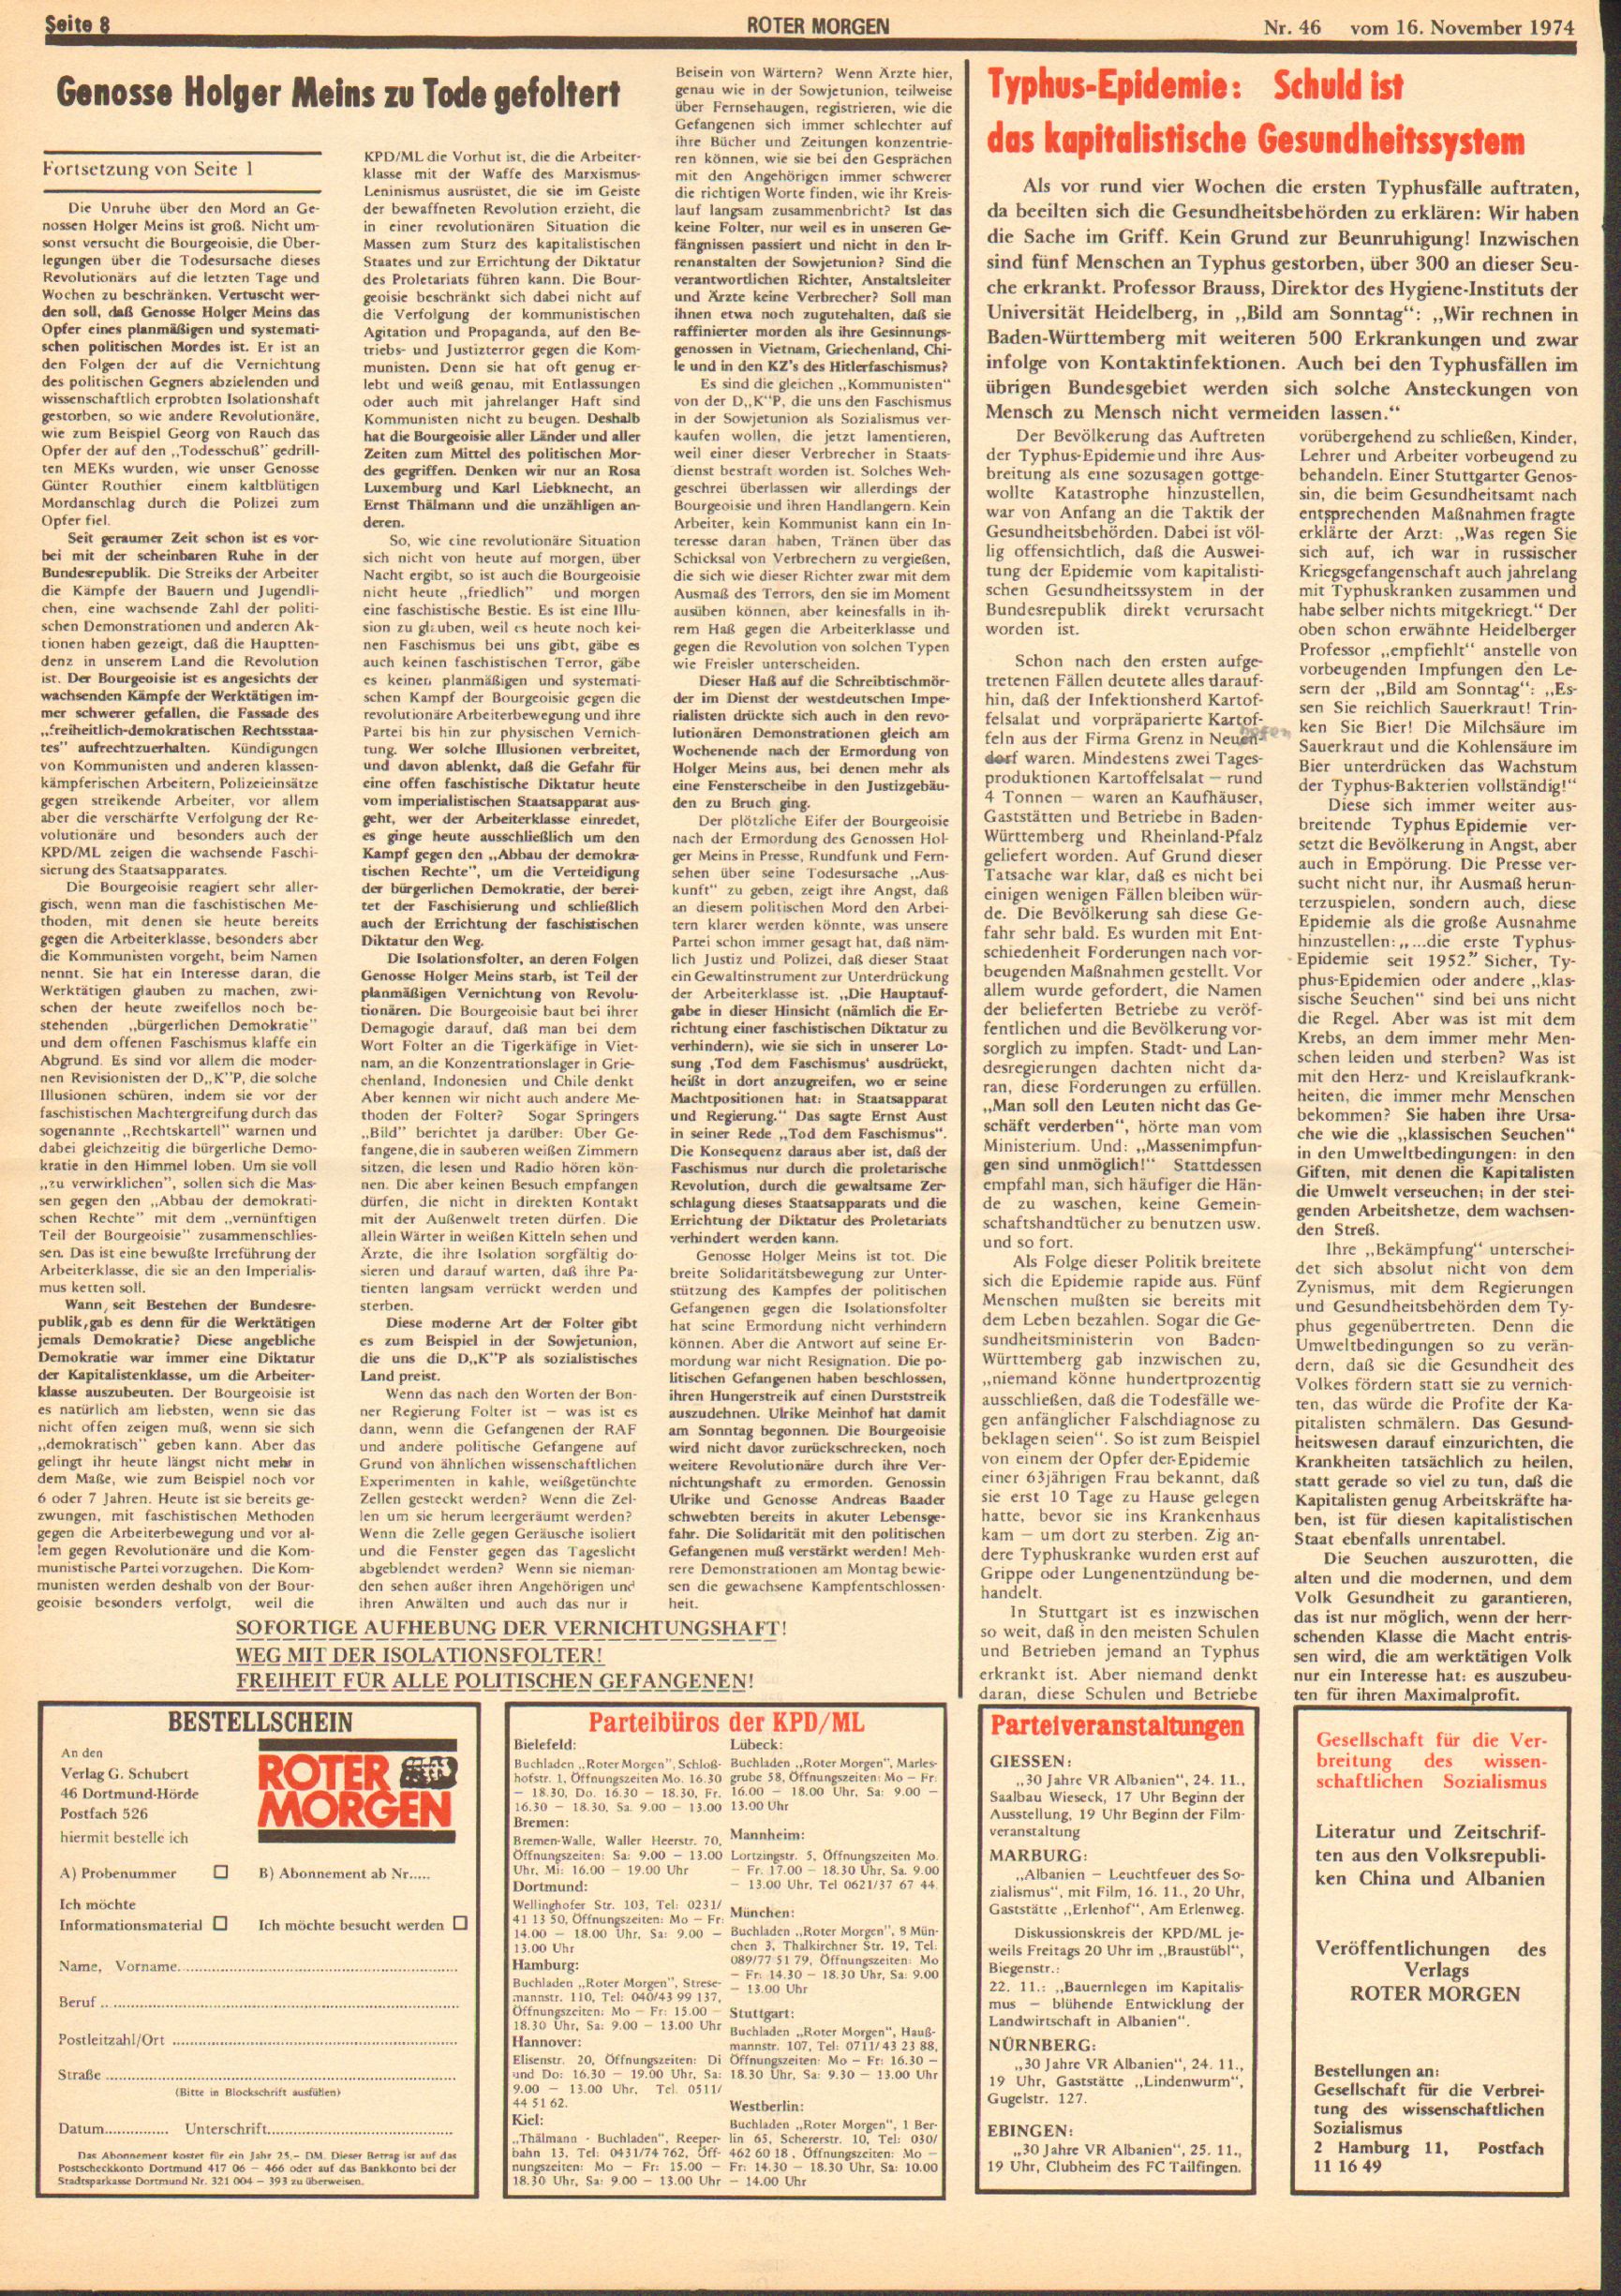 Roter Morgen, 8. Jg., 16. November 1974, Nr. 46, Seite 8